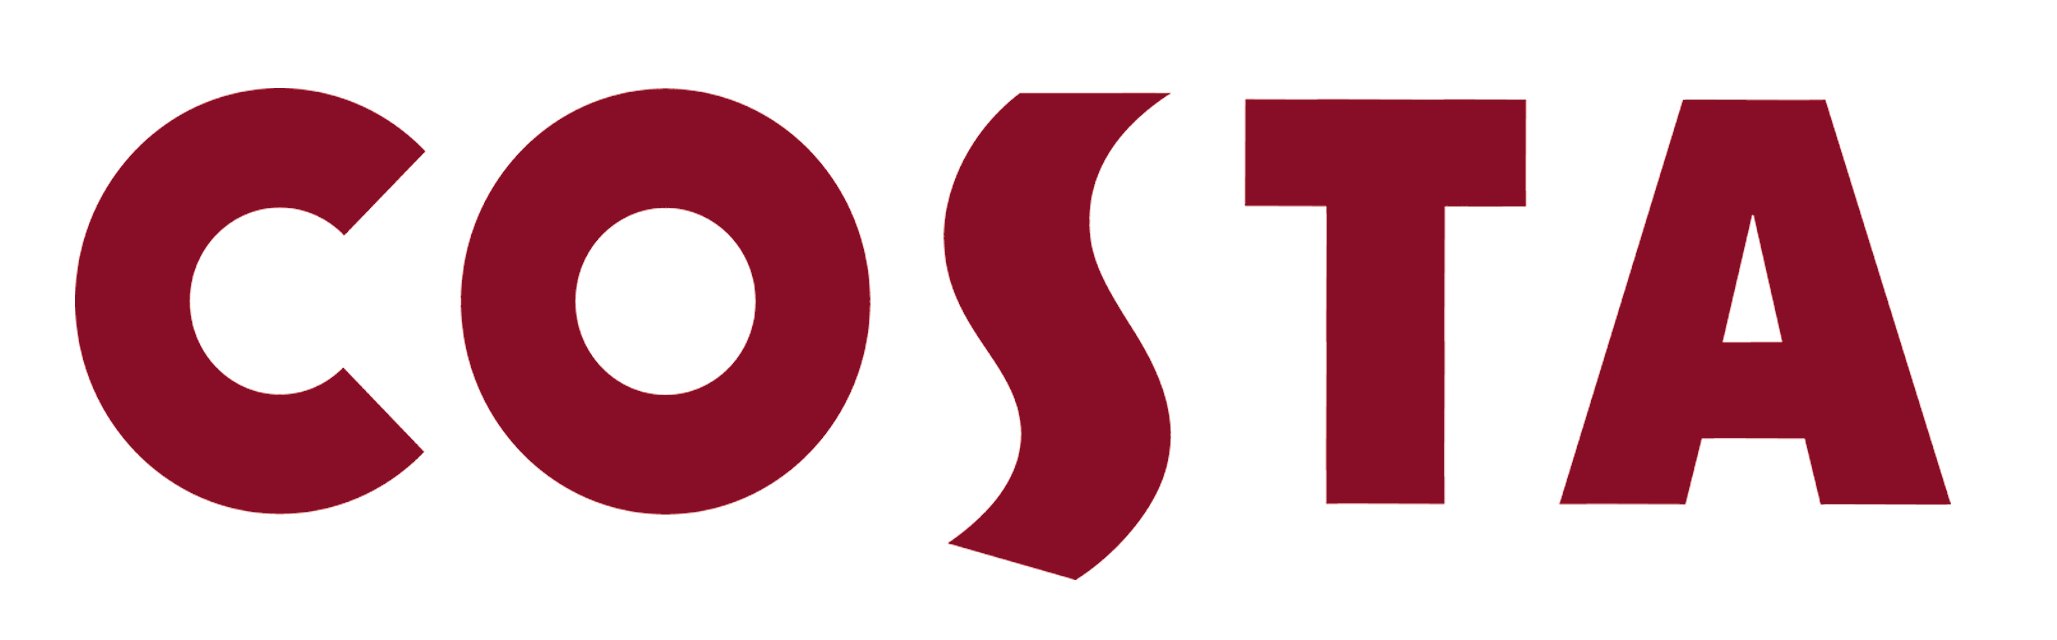 Costa_logo.png